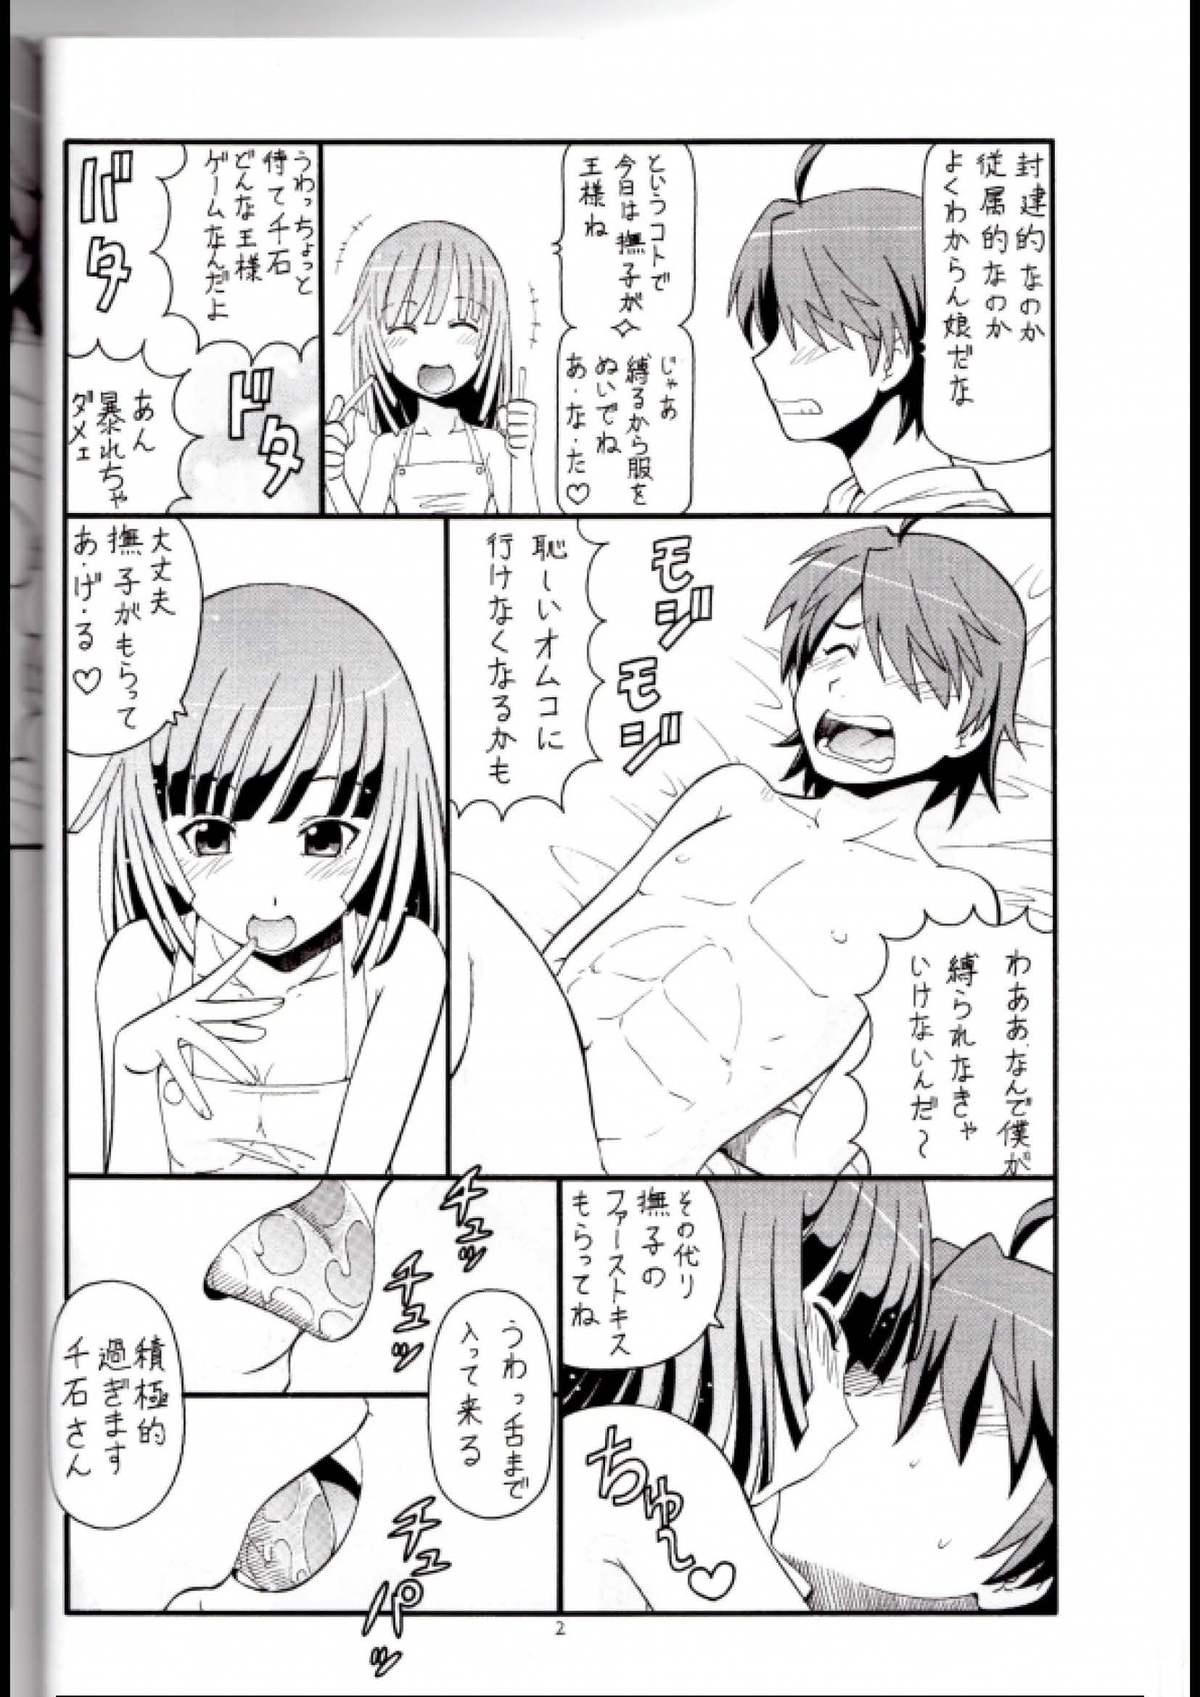 Skirt Hito ni Hakanai to Kaite "Araragi" to Yomu 2&3 - Bakemonogatari Amateur Vids - Page 3